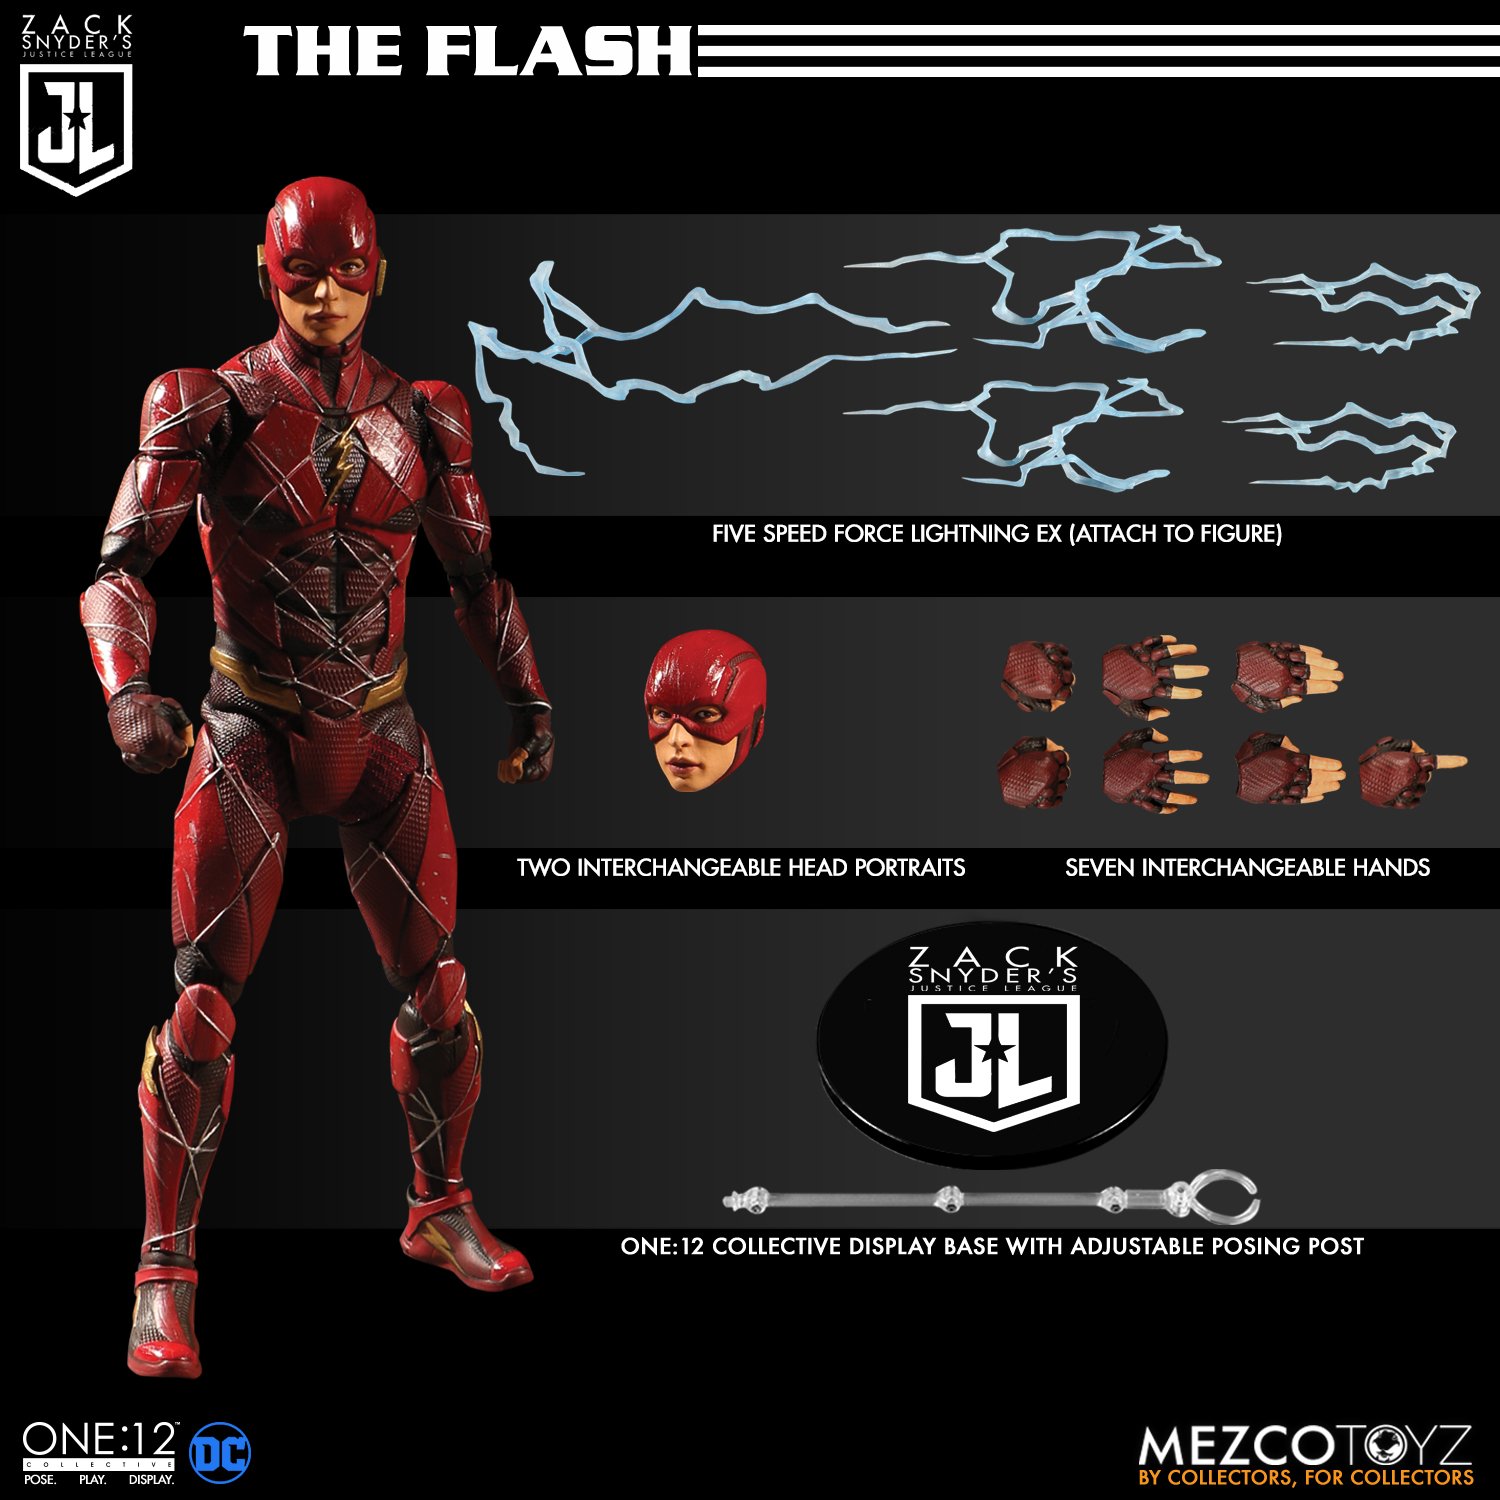 Flash, complete